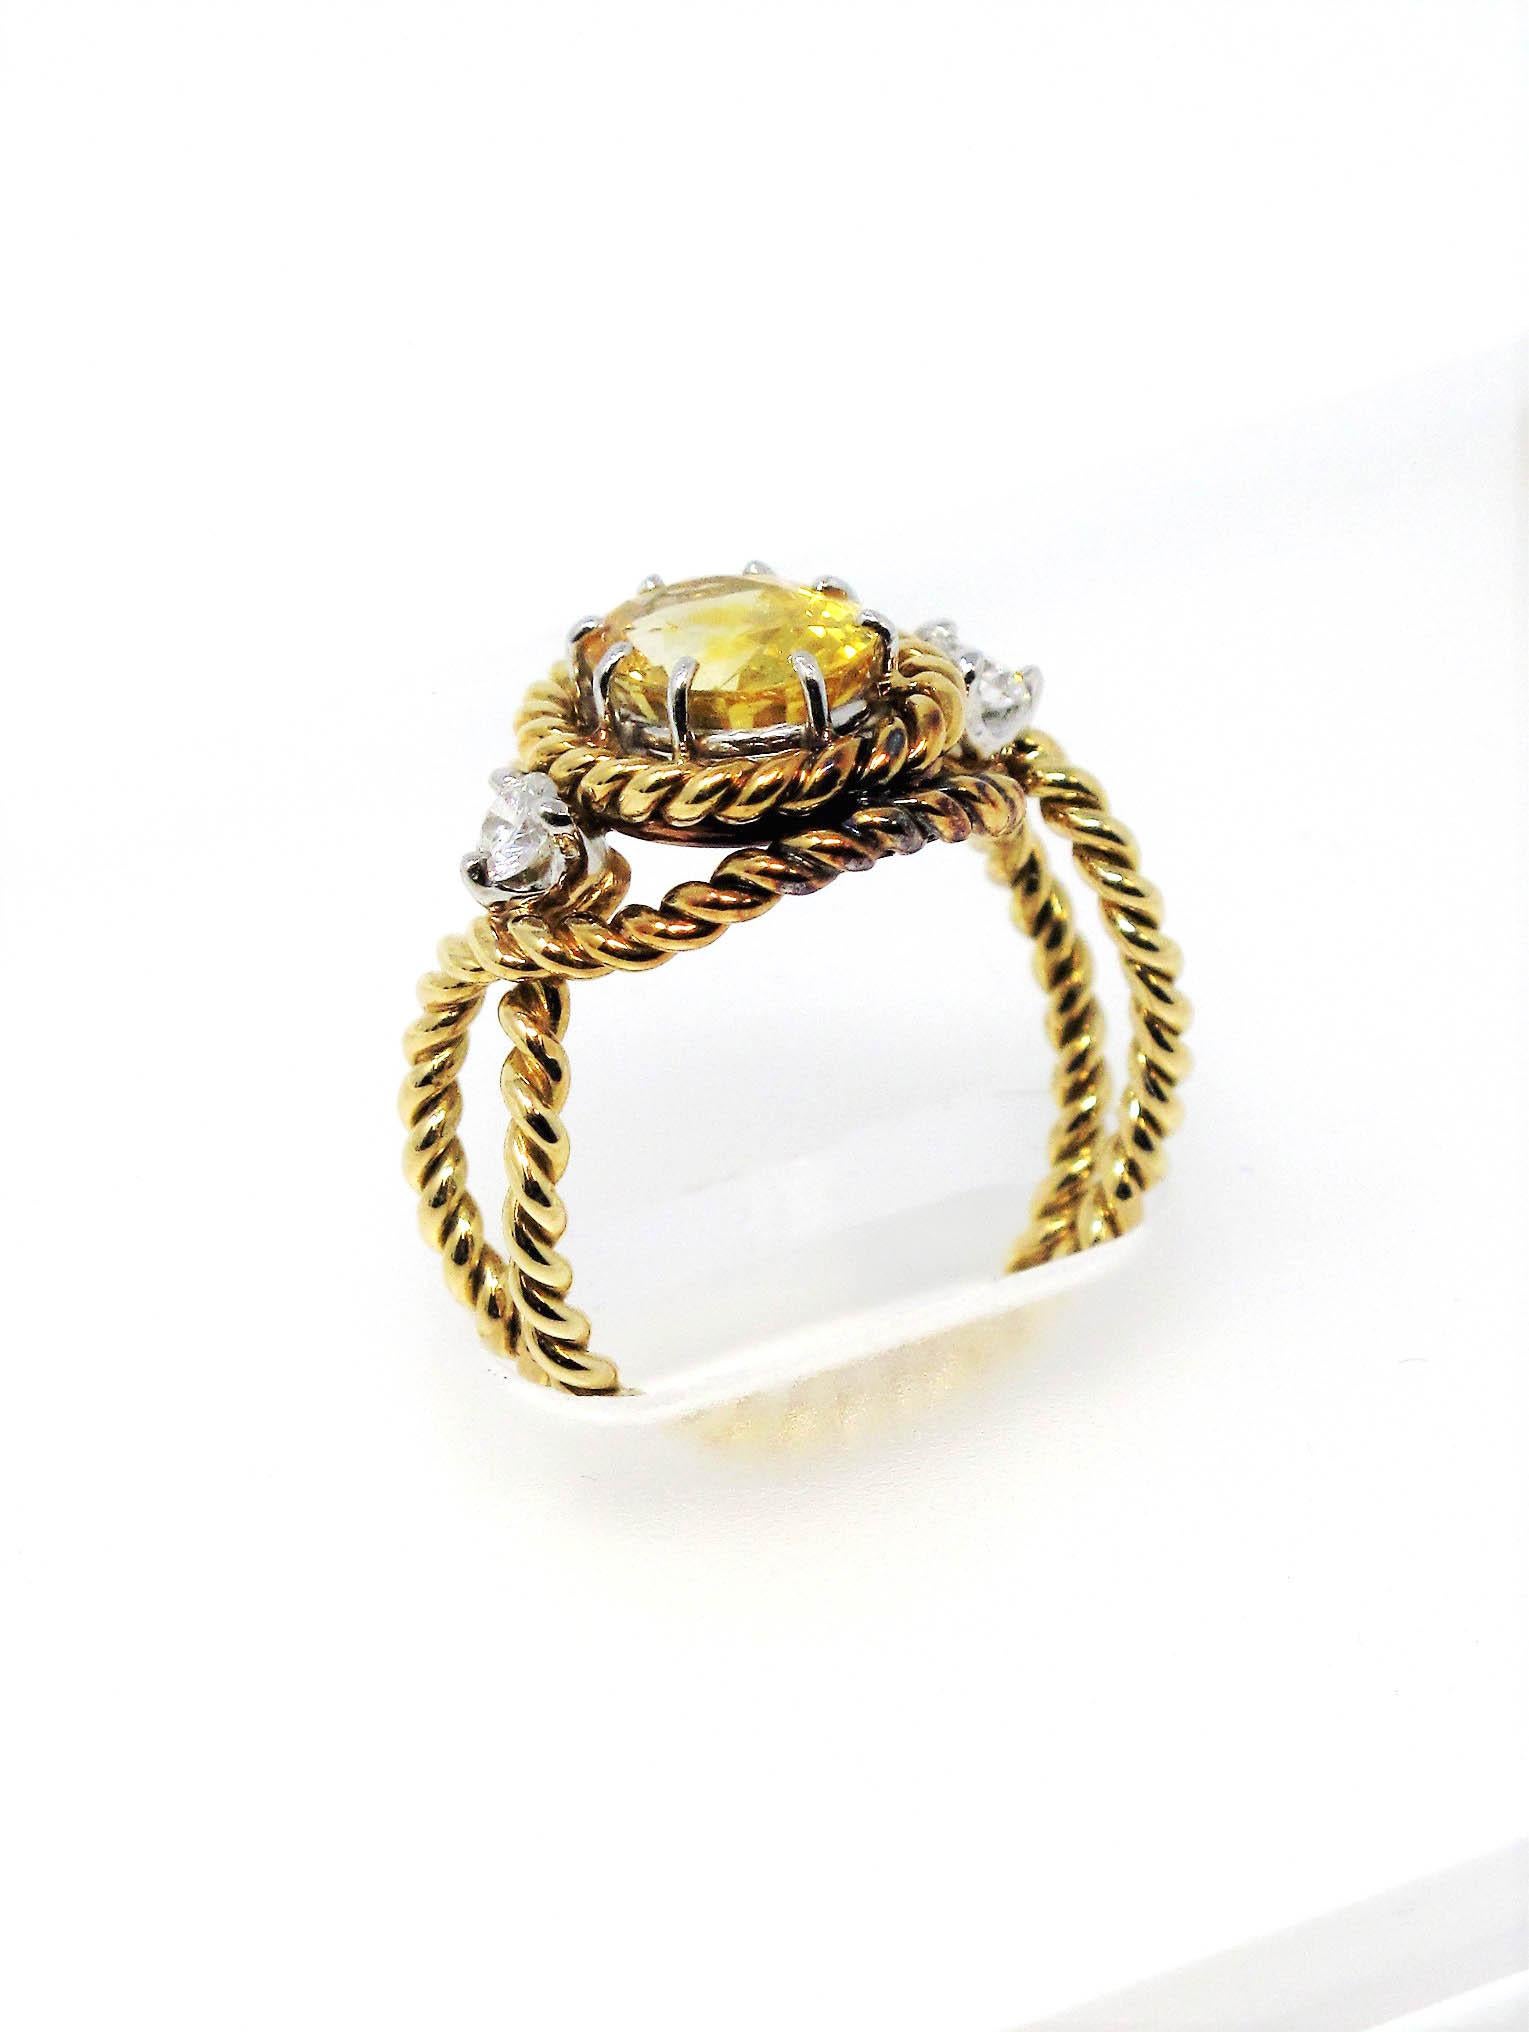 Jean Schlumberger Tiffany & Co. Yellow Sapphire and Diamond Ring 18 Karat Gold 1